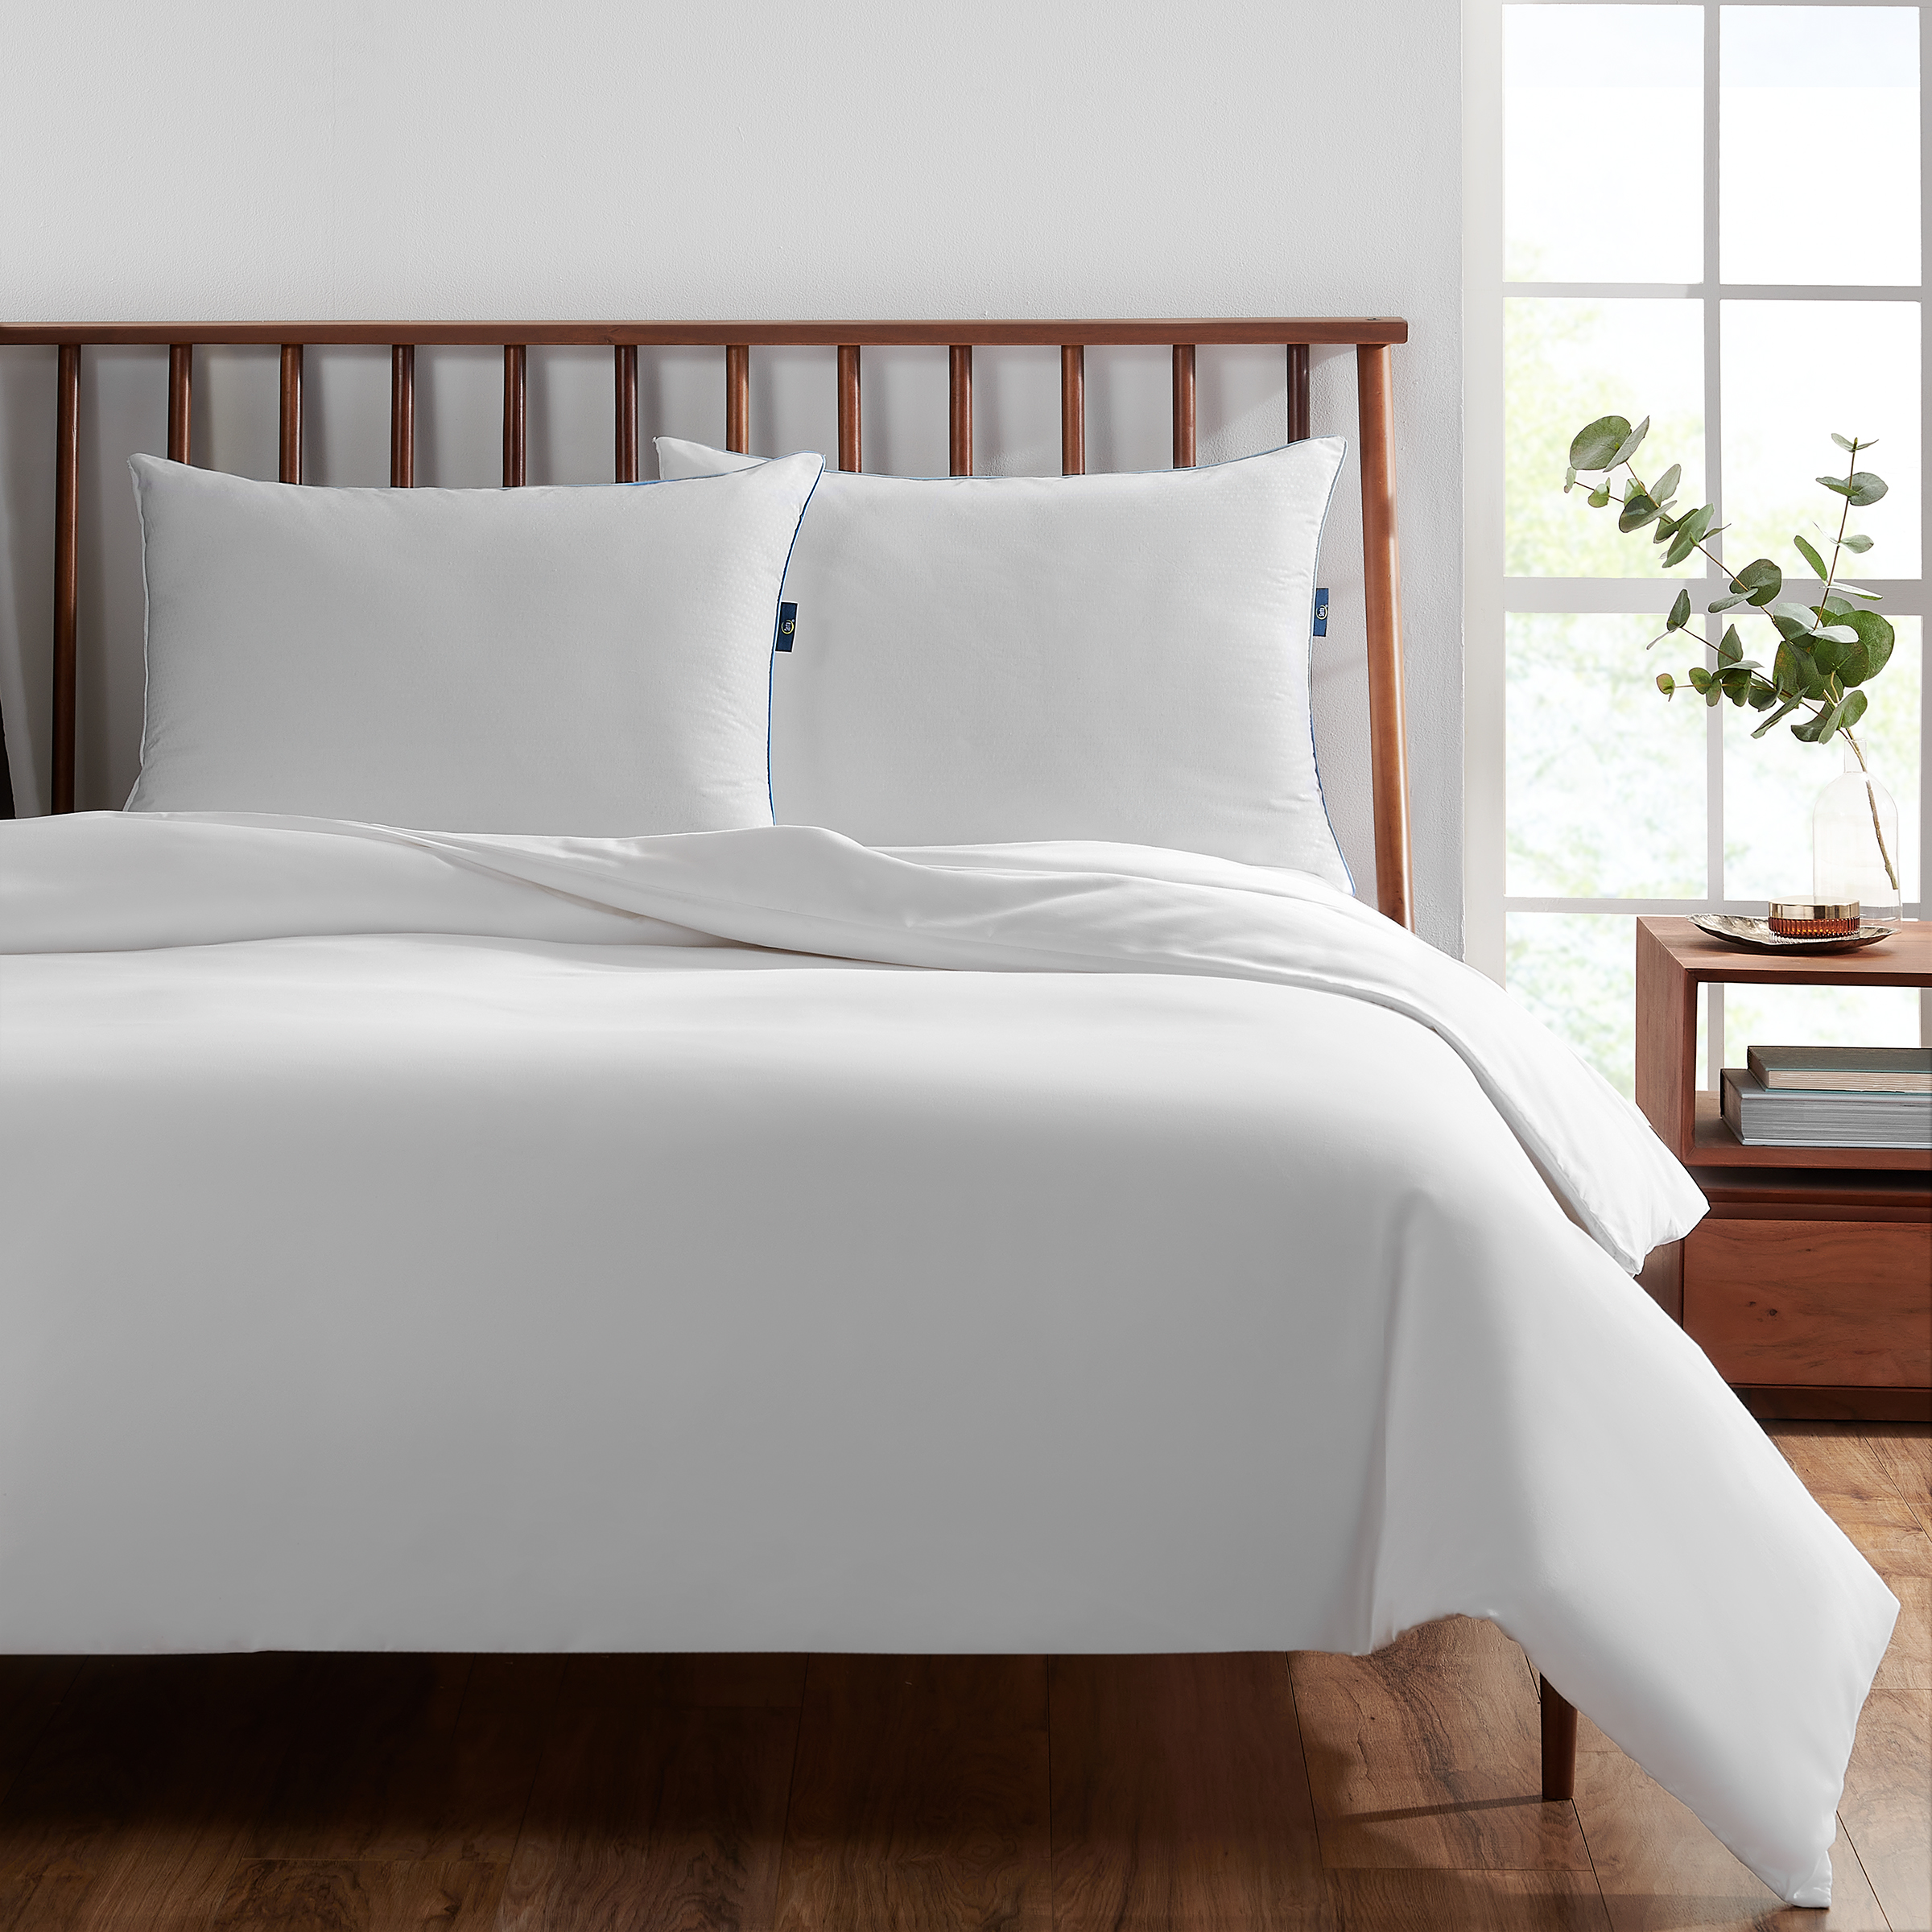 Sertapedic Cool Nites Bed Pillow, Standard/Queen - image 3 of 6